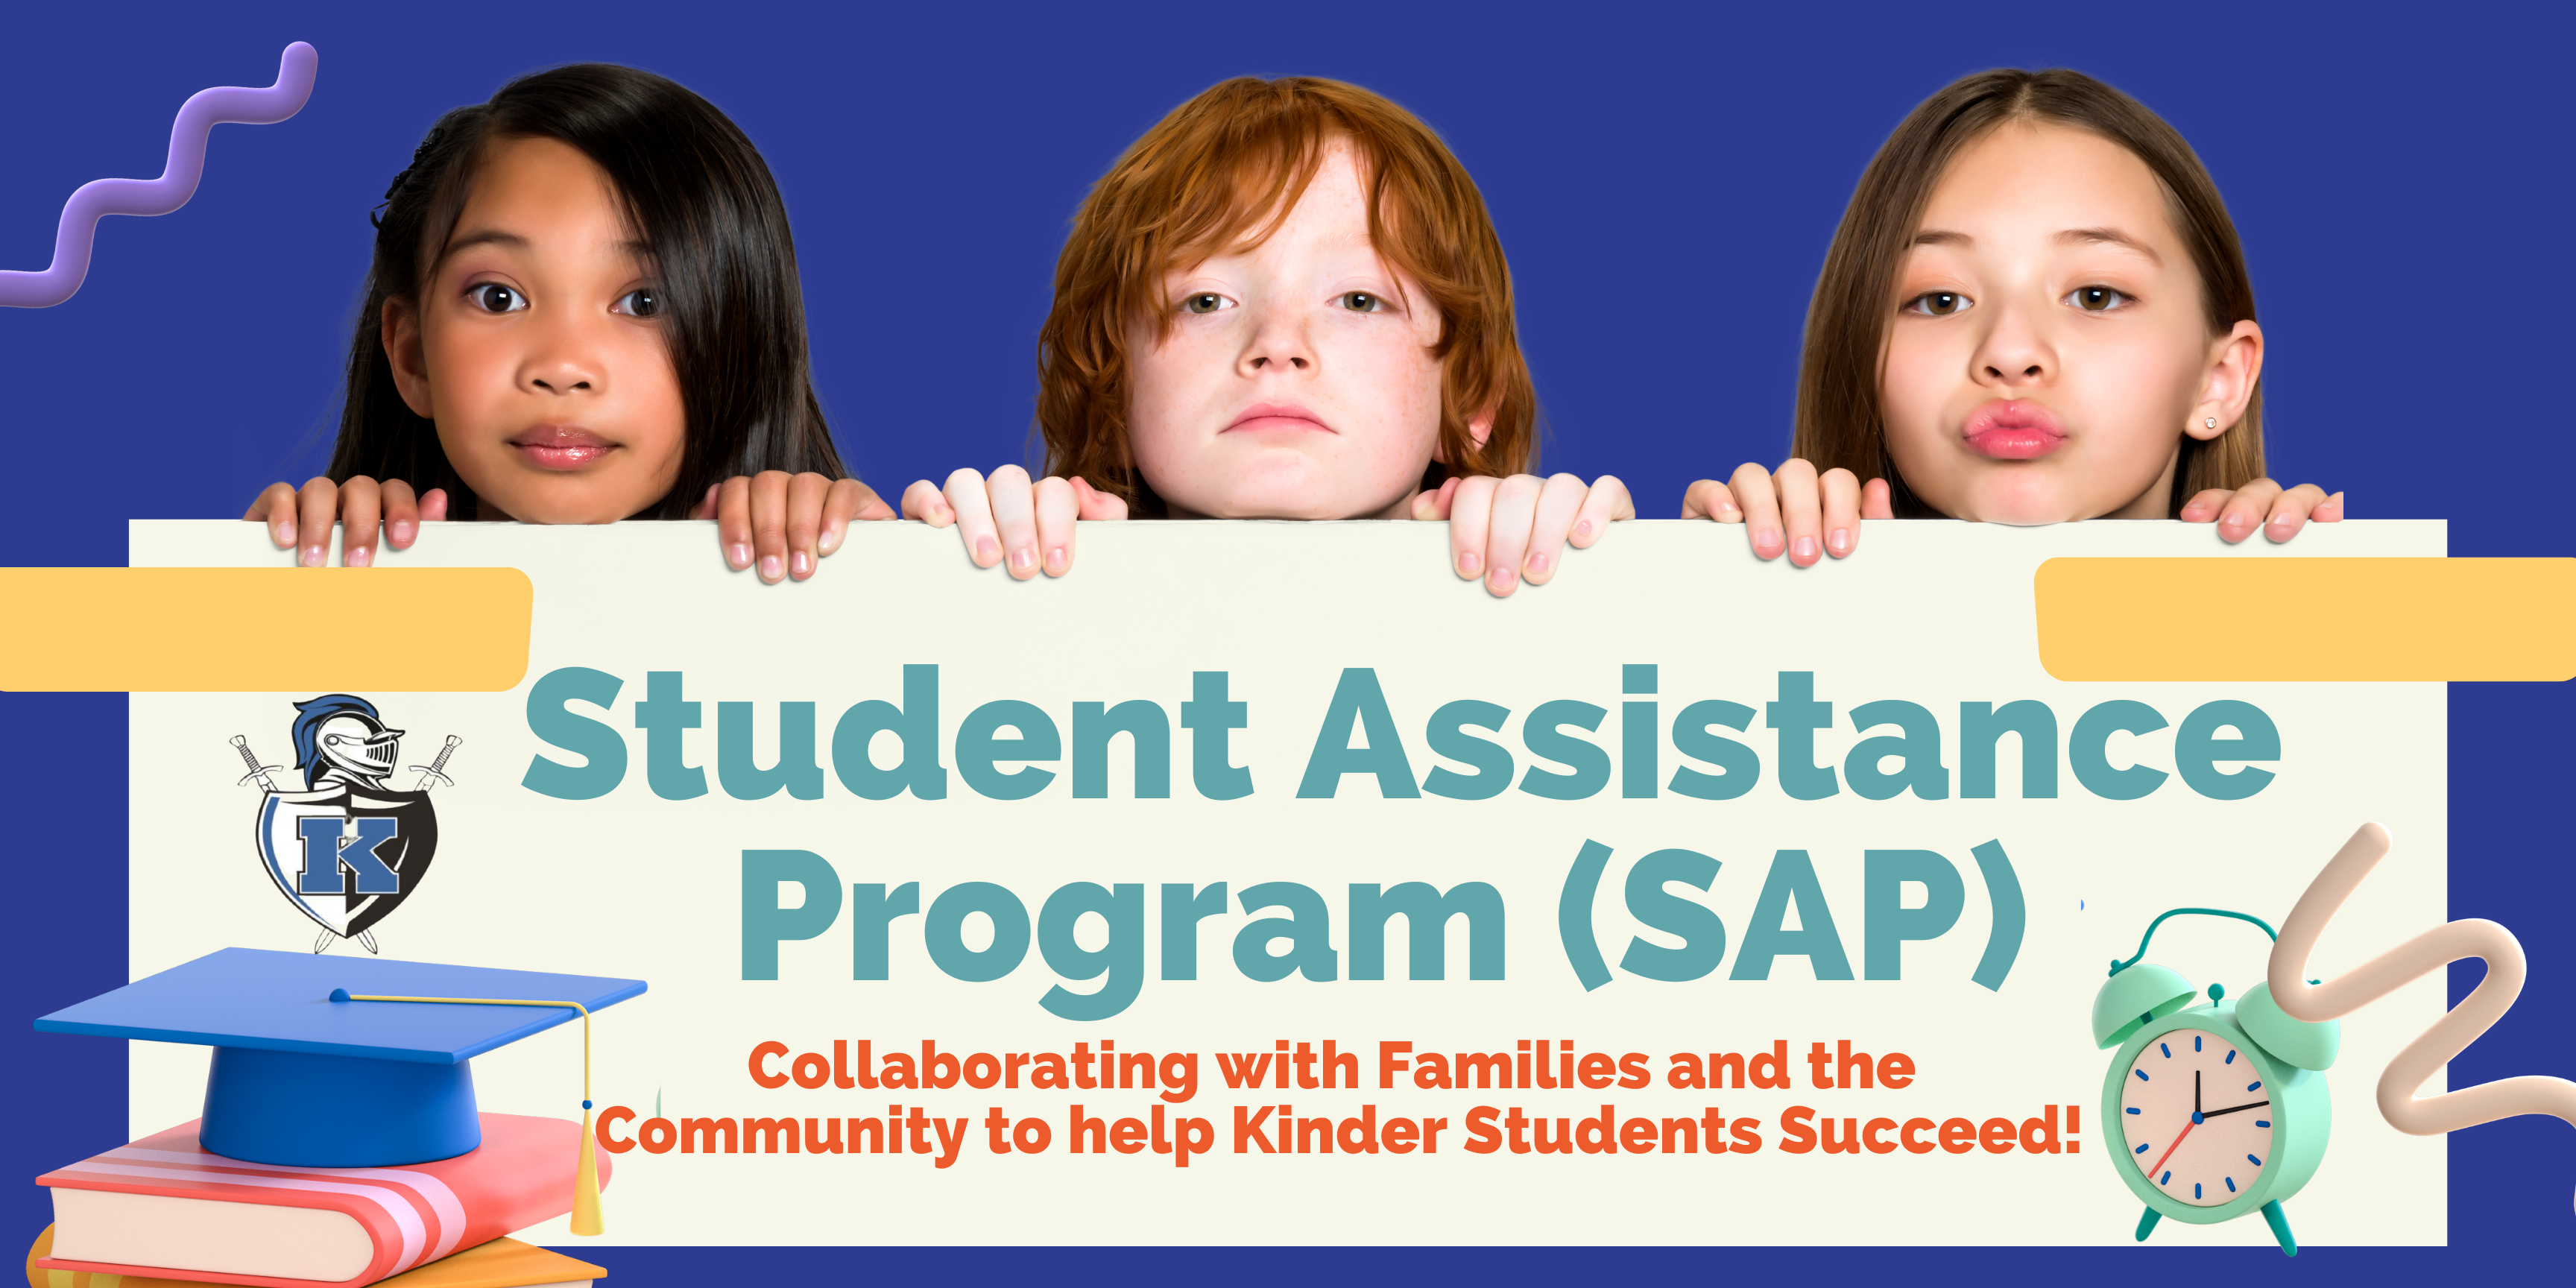 Student assistance program